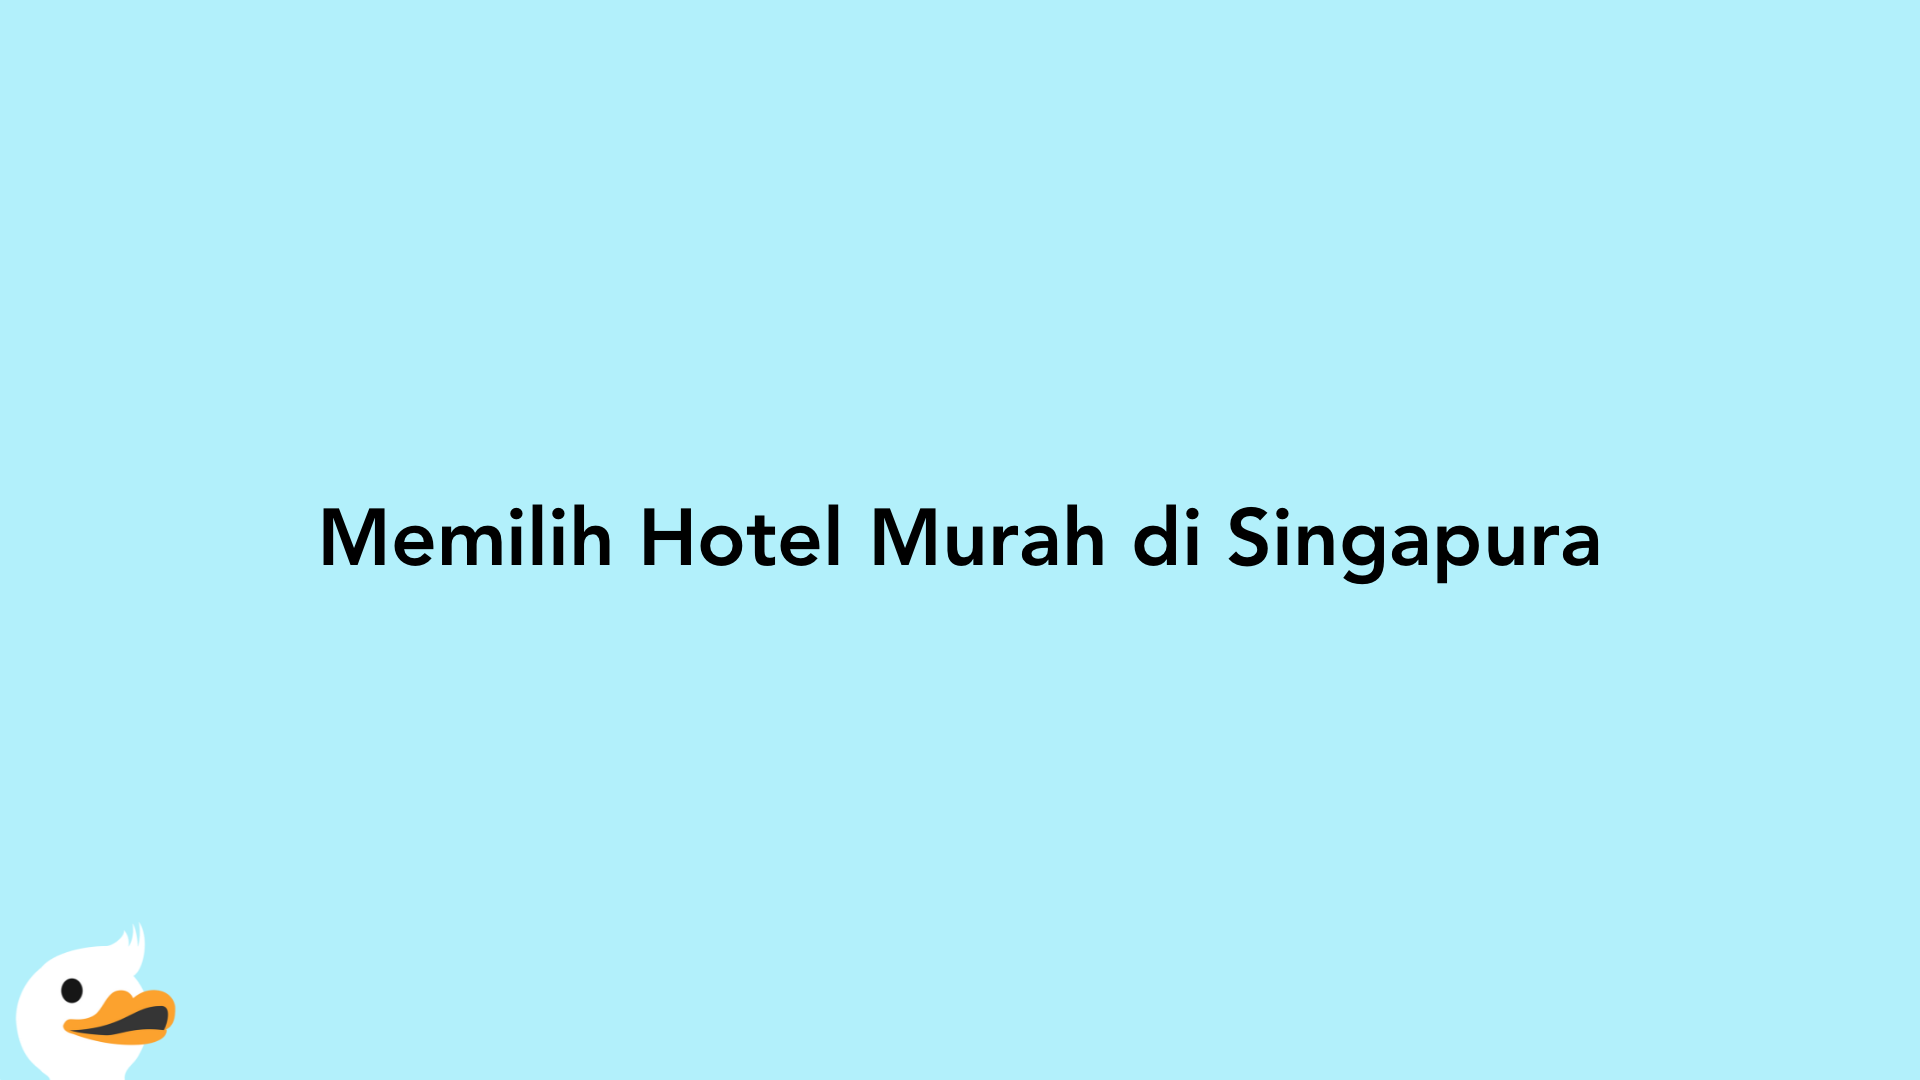 Memilih Hotel Murah di Singapura